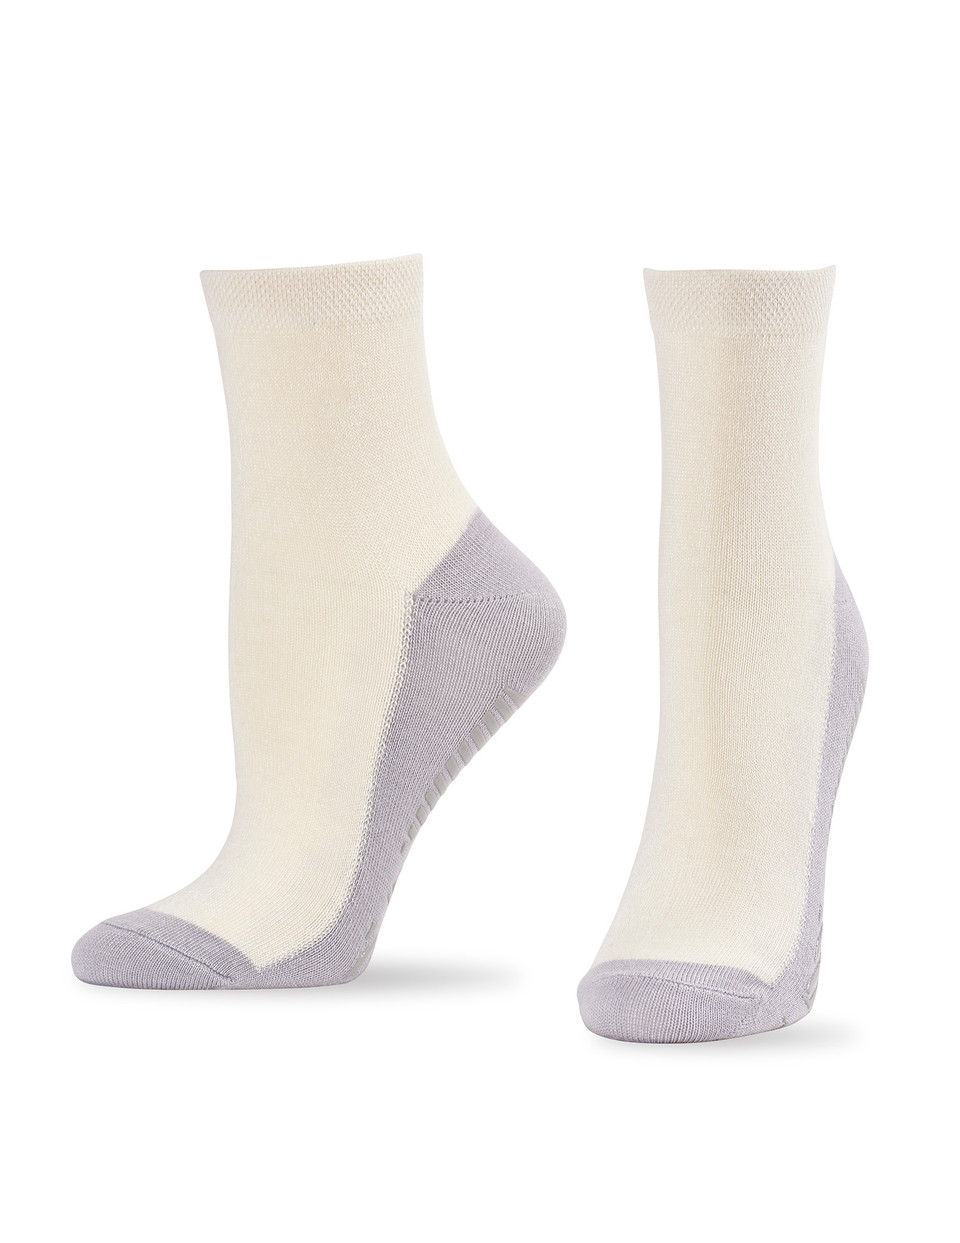 Putzing Around Gripper Anklet - Socks | HUE